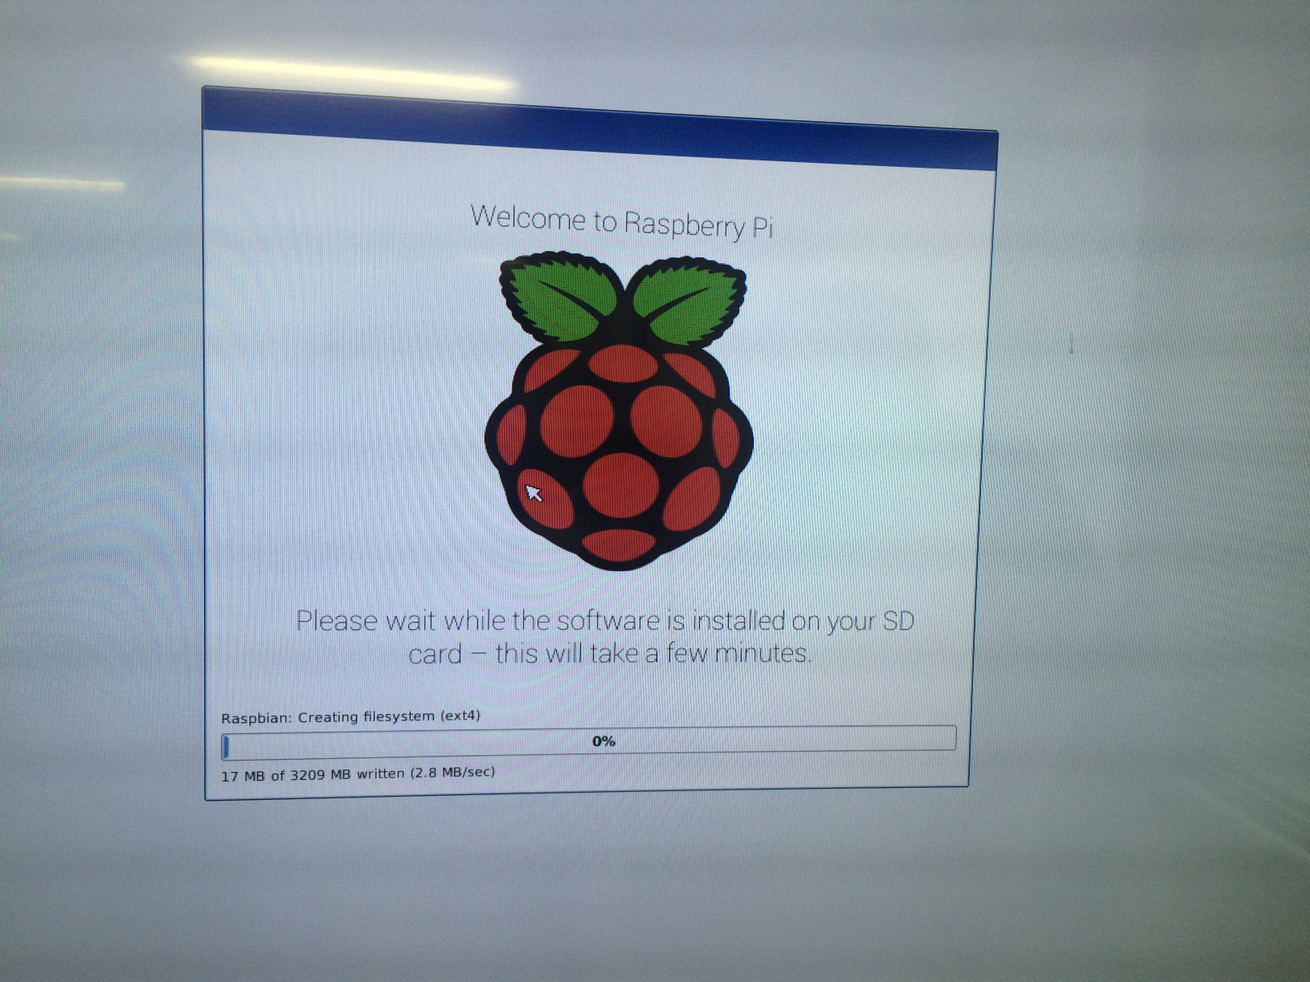 Welcome to Raspberry Pi